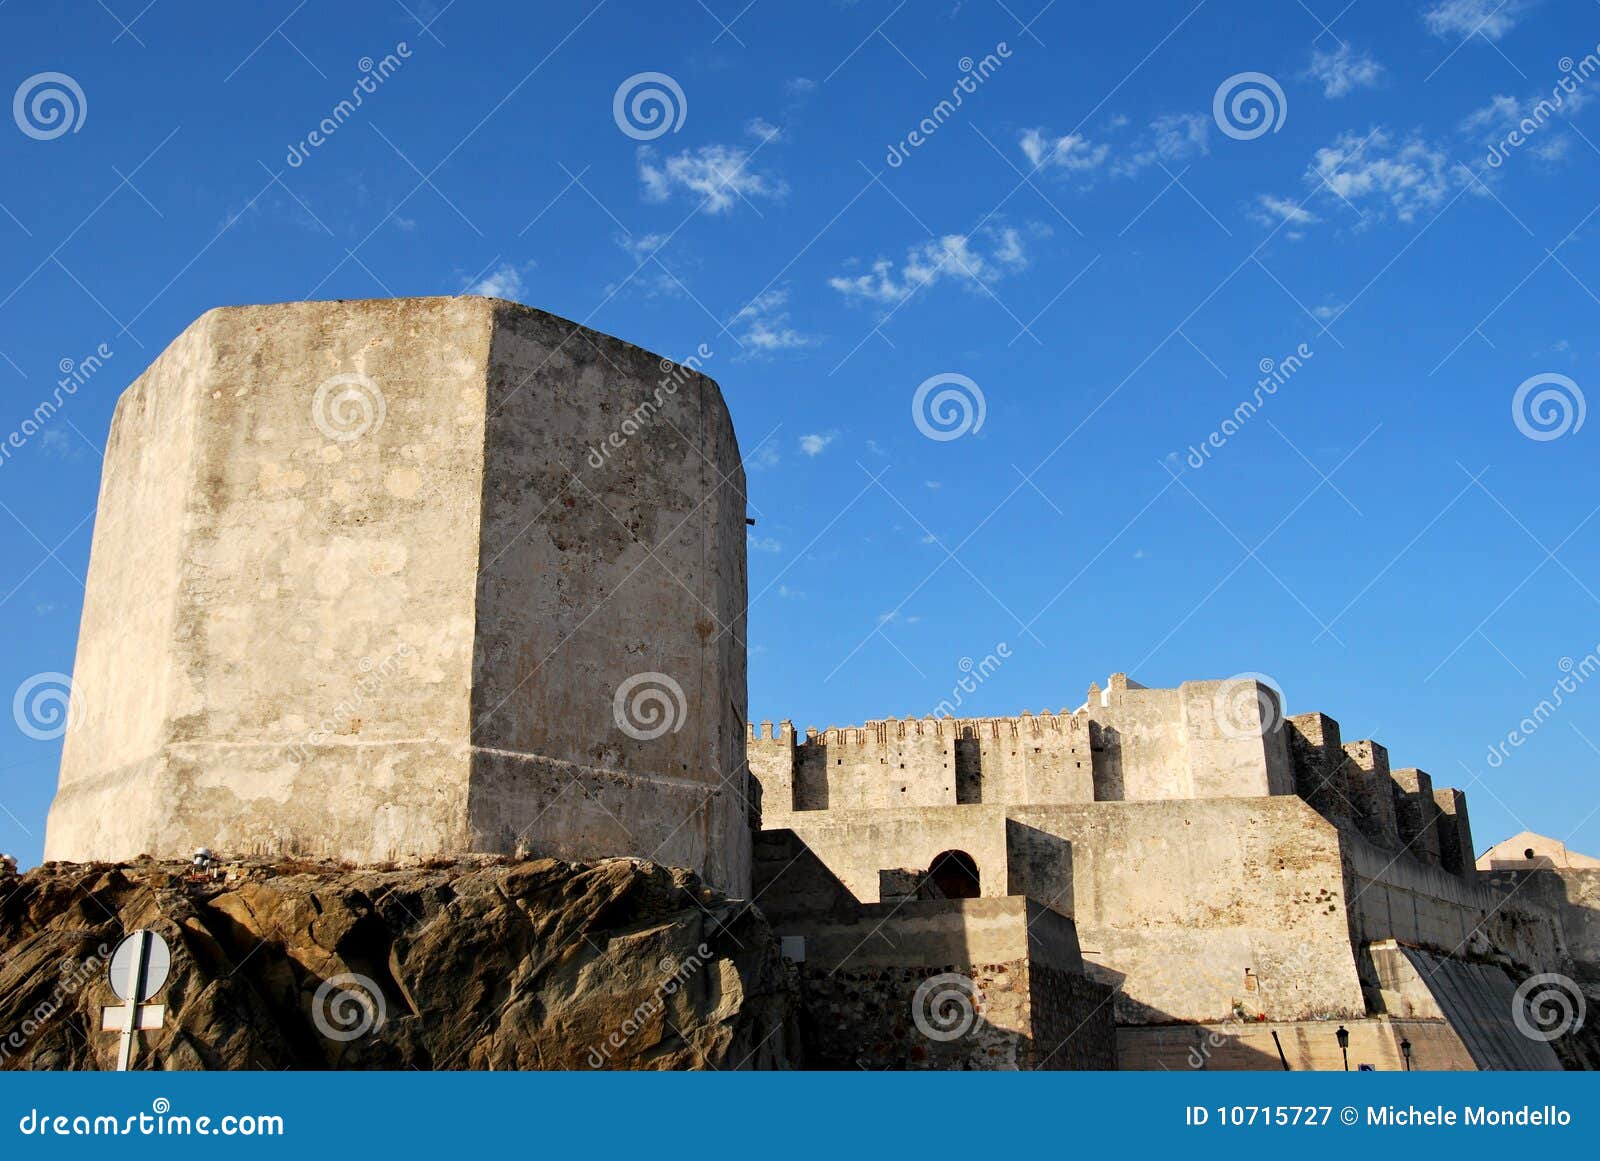 castle of tarifa